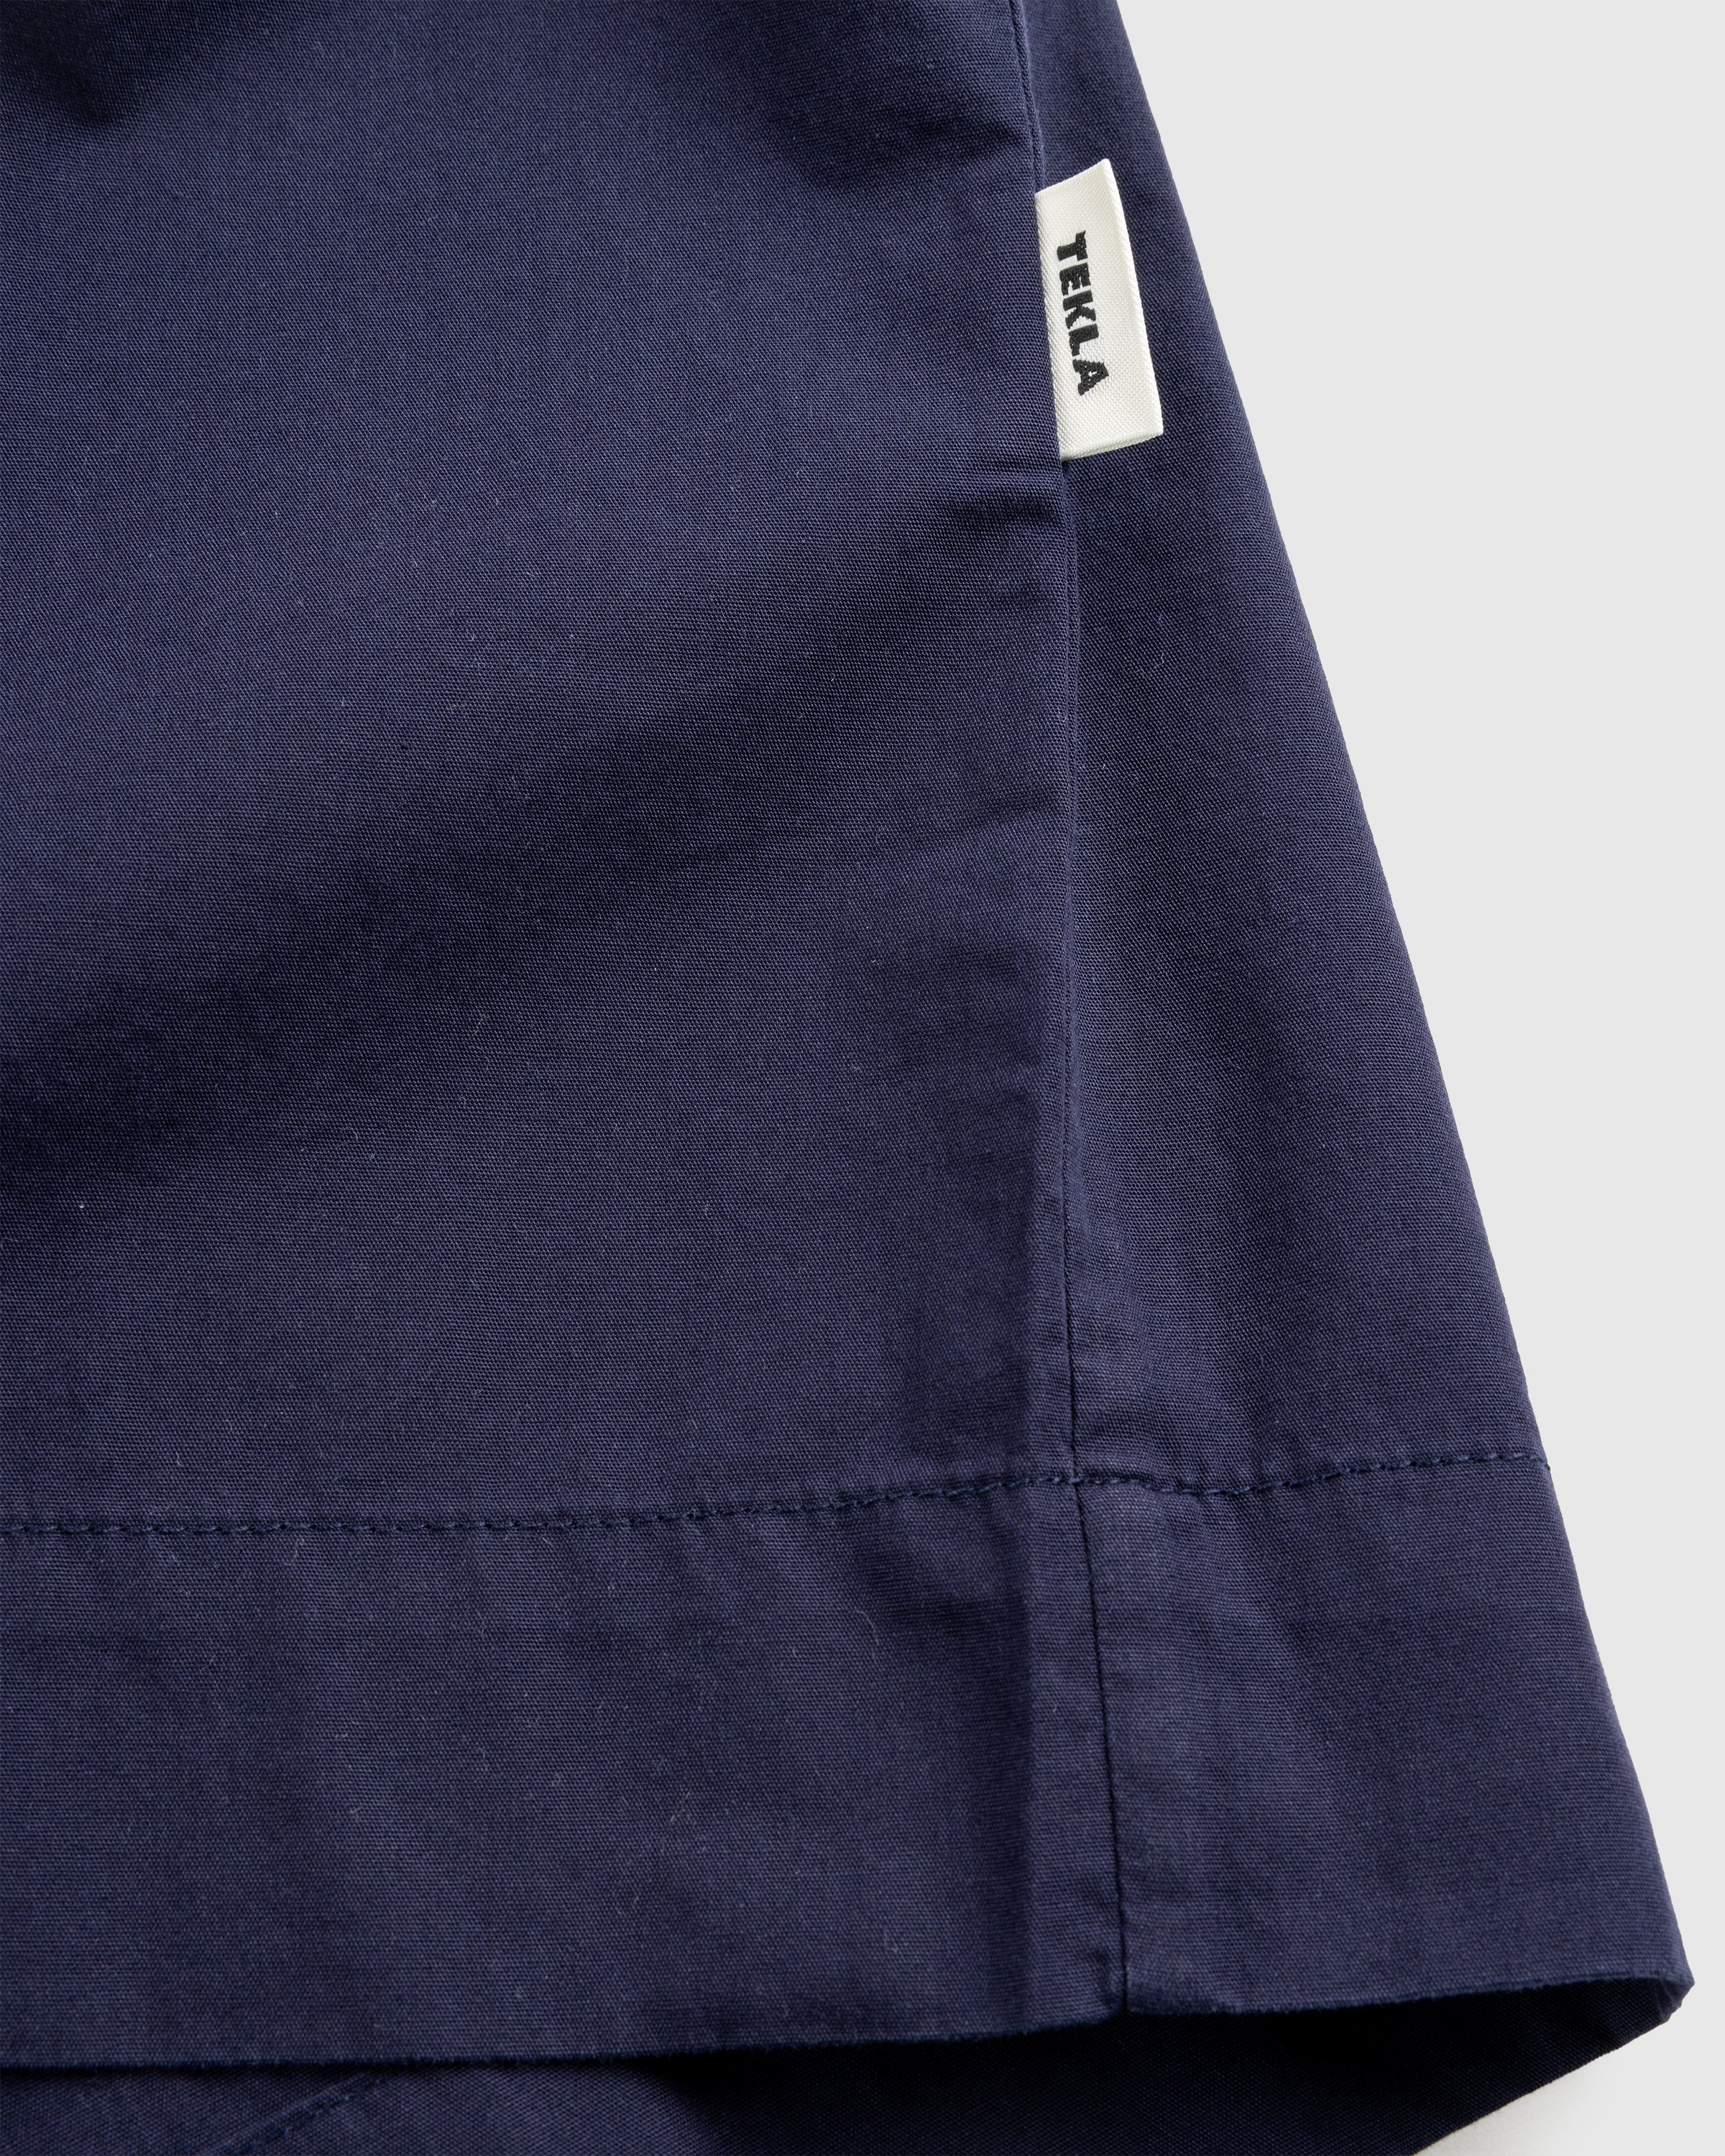 Tekla - Cotton Poplin - Pyjamas Shirt True Navy - Clothing - Blue - Image 7